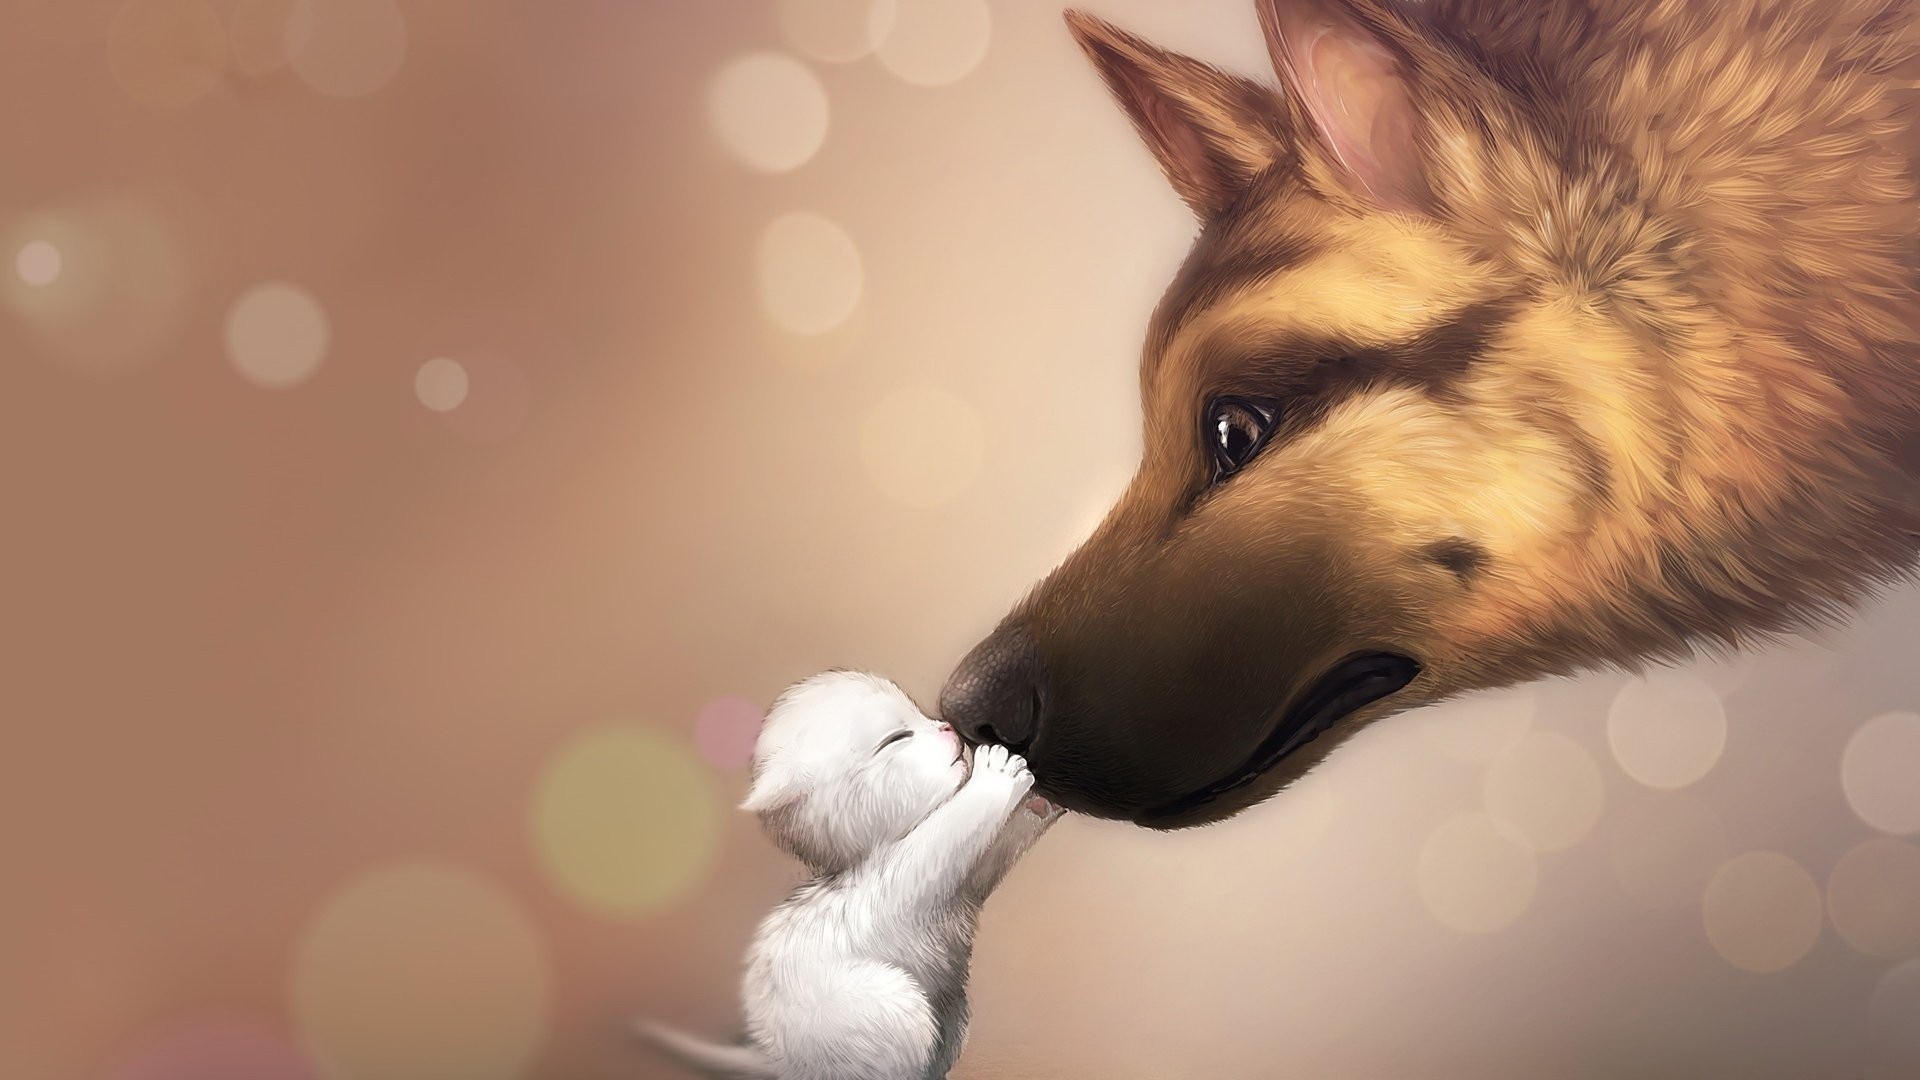 Love Animated Cute Dog Wallpaper Full Screen High